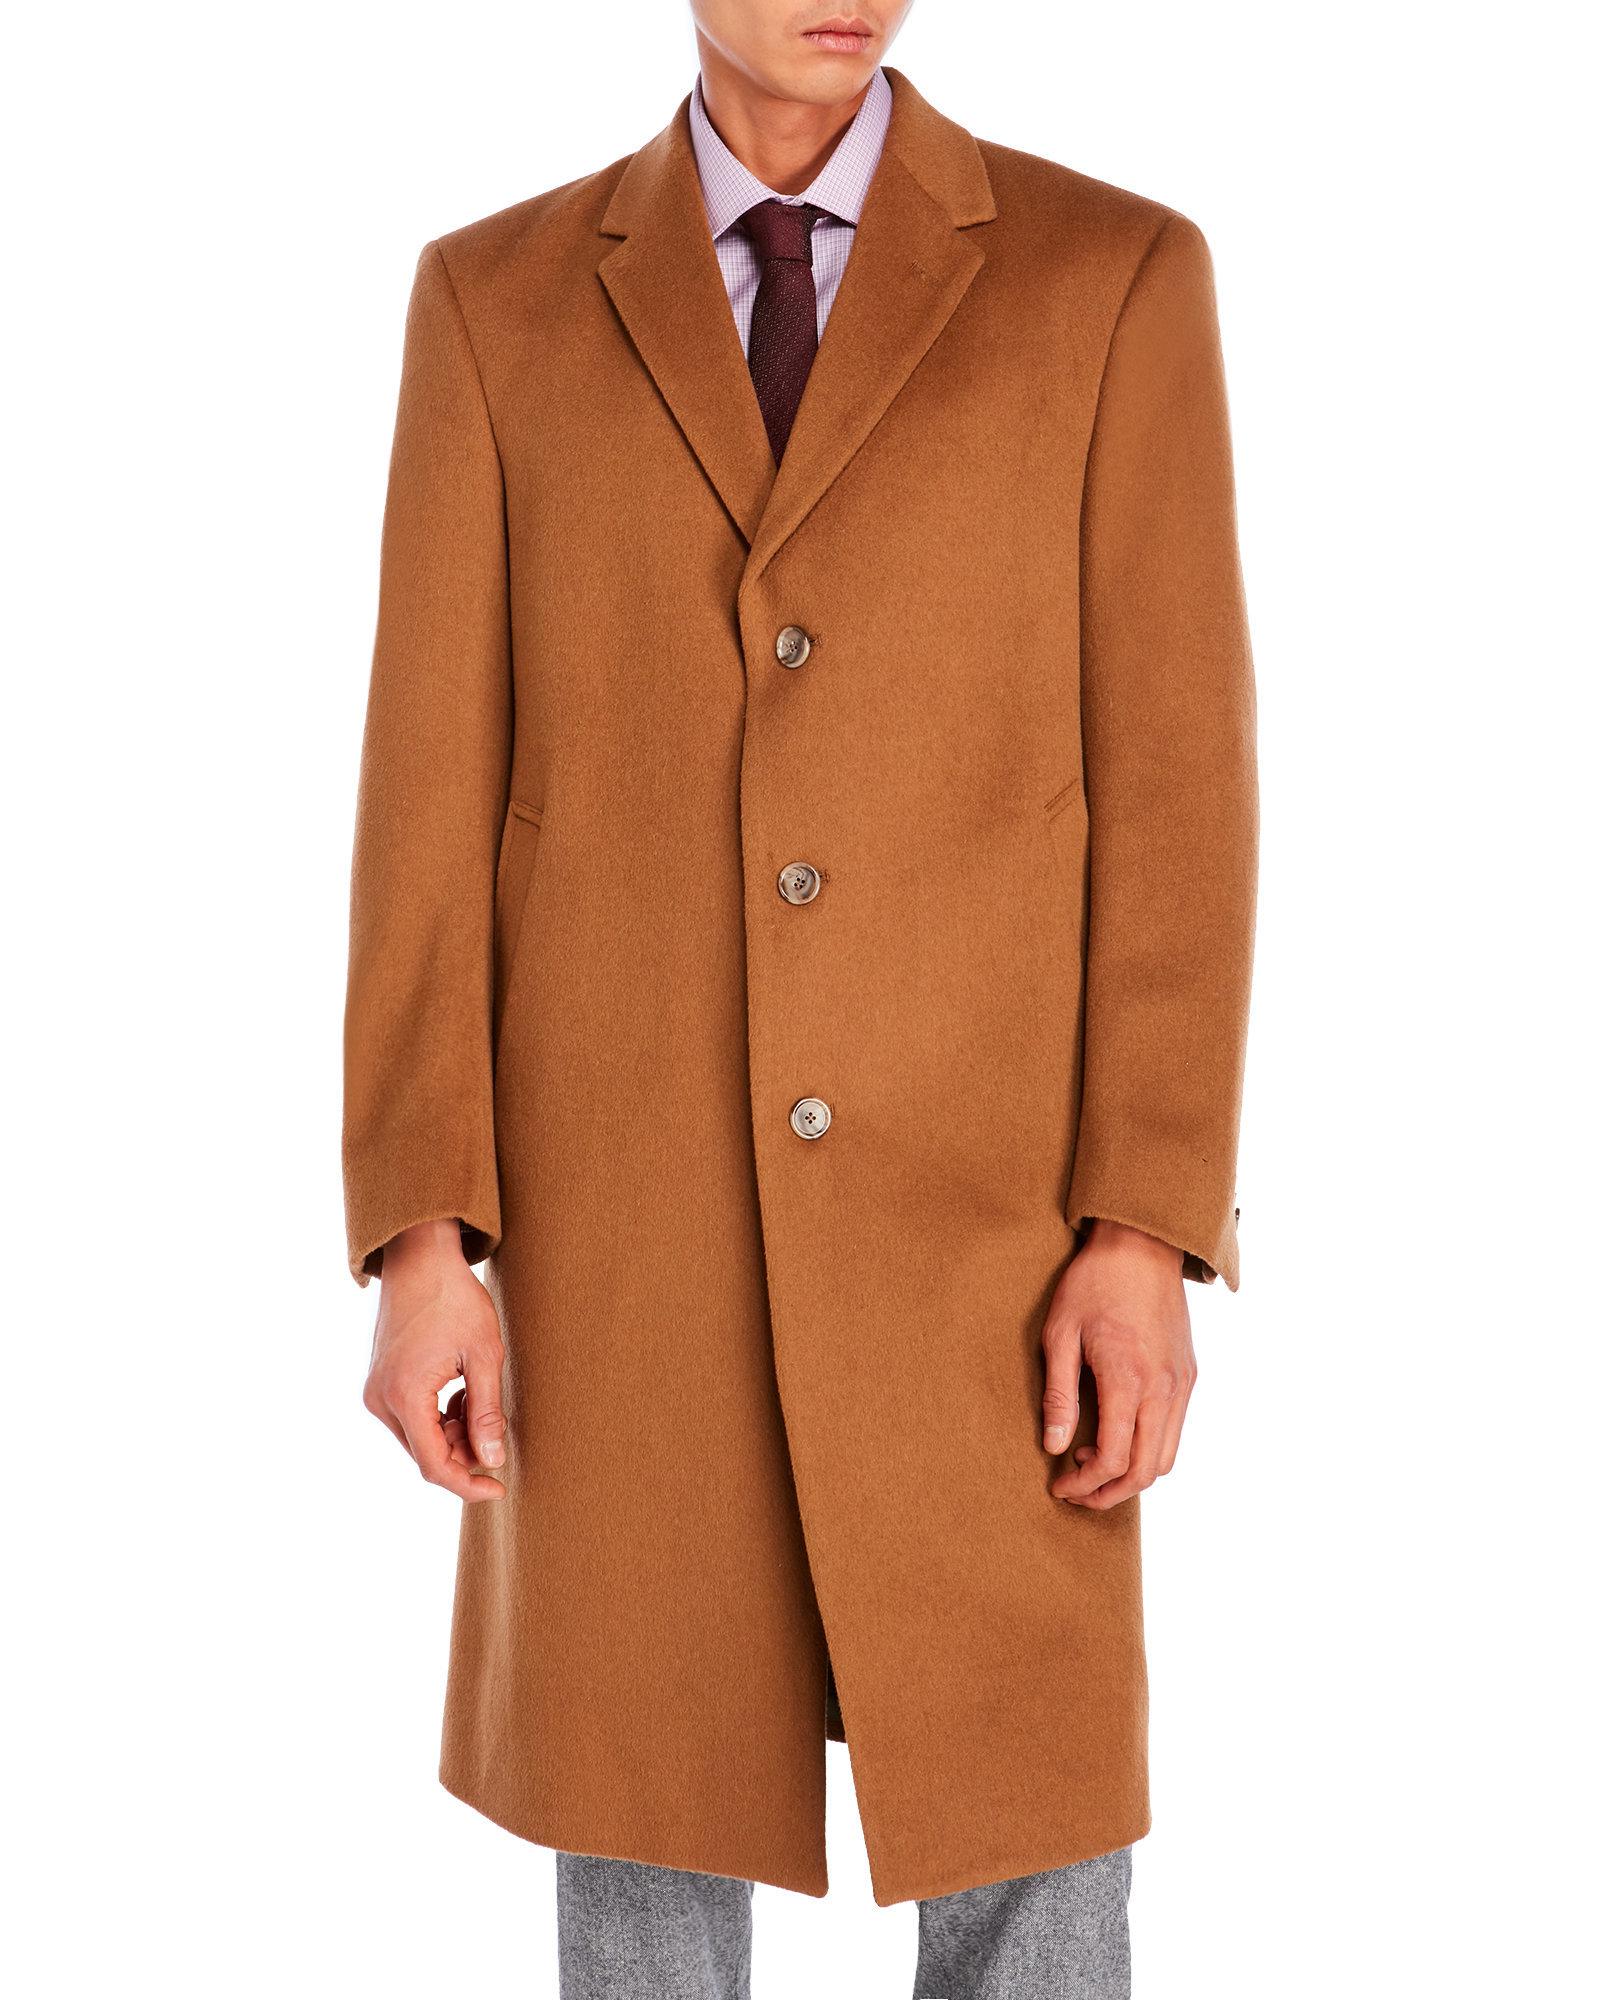 Tommy Hilfiger Wool Camel Long Coat in Brown for Men - Lyst